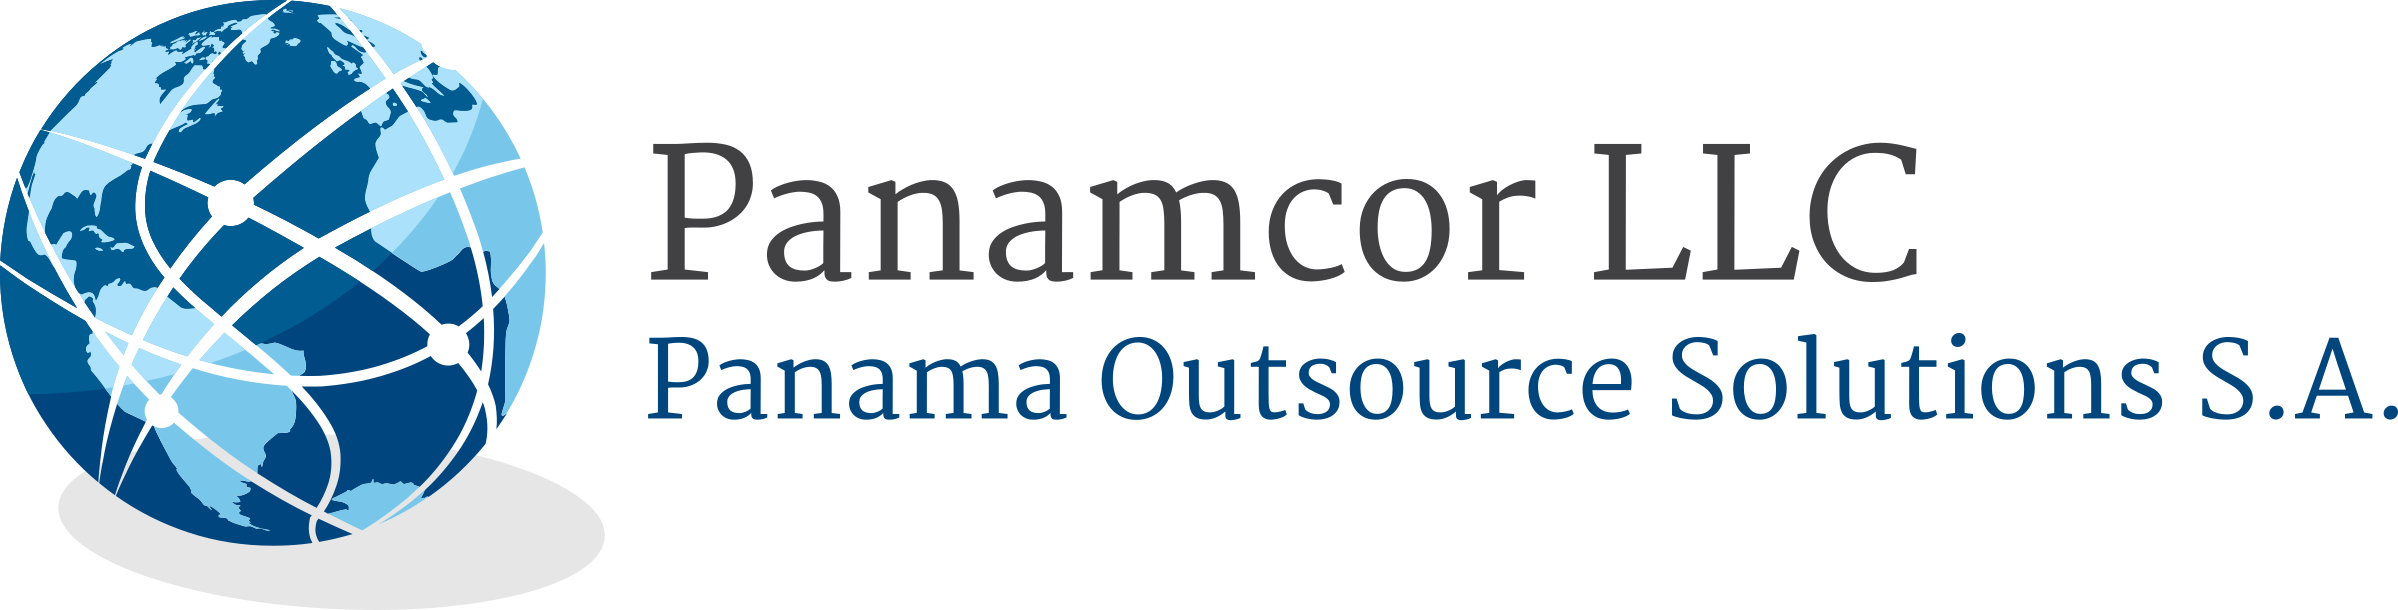 Panamcor LLC